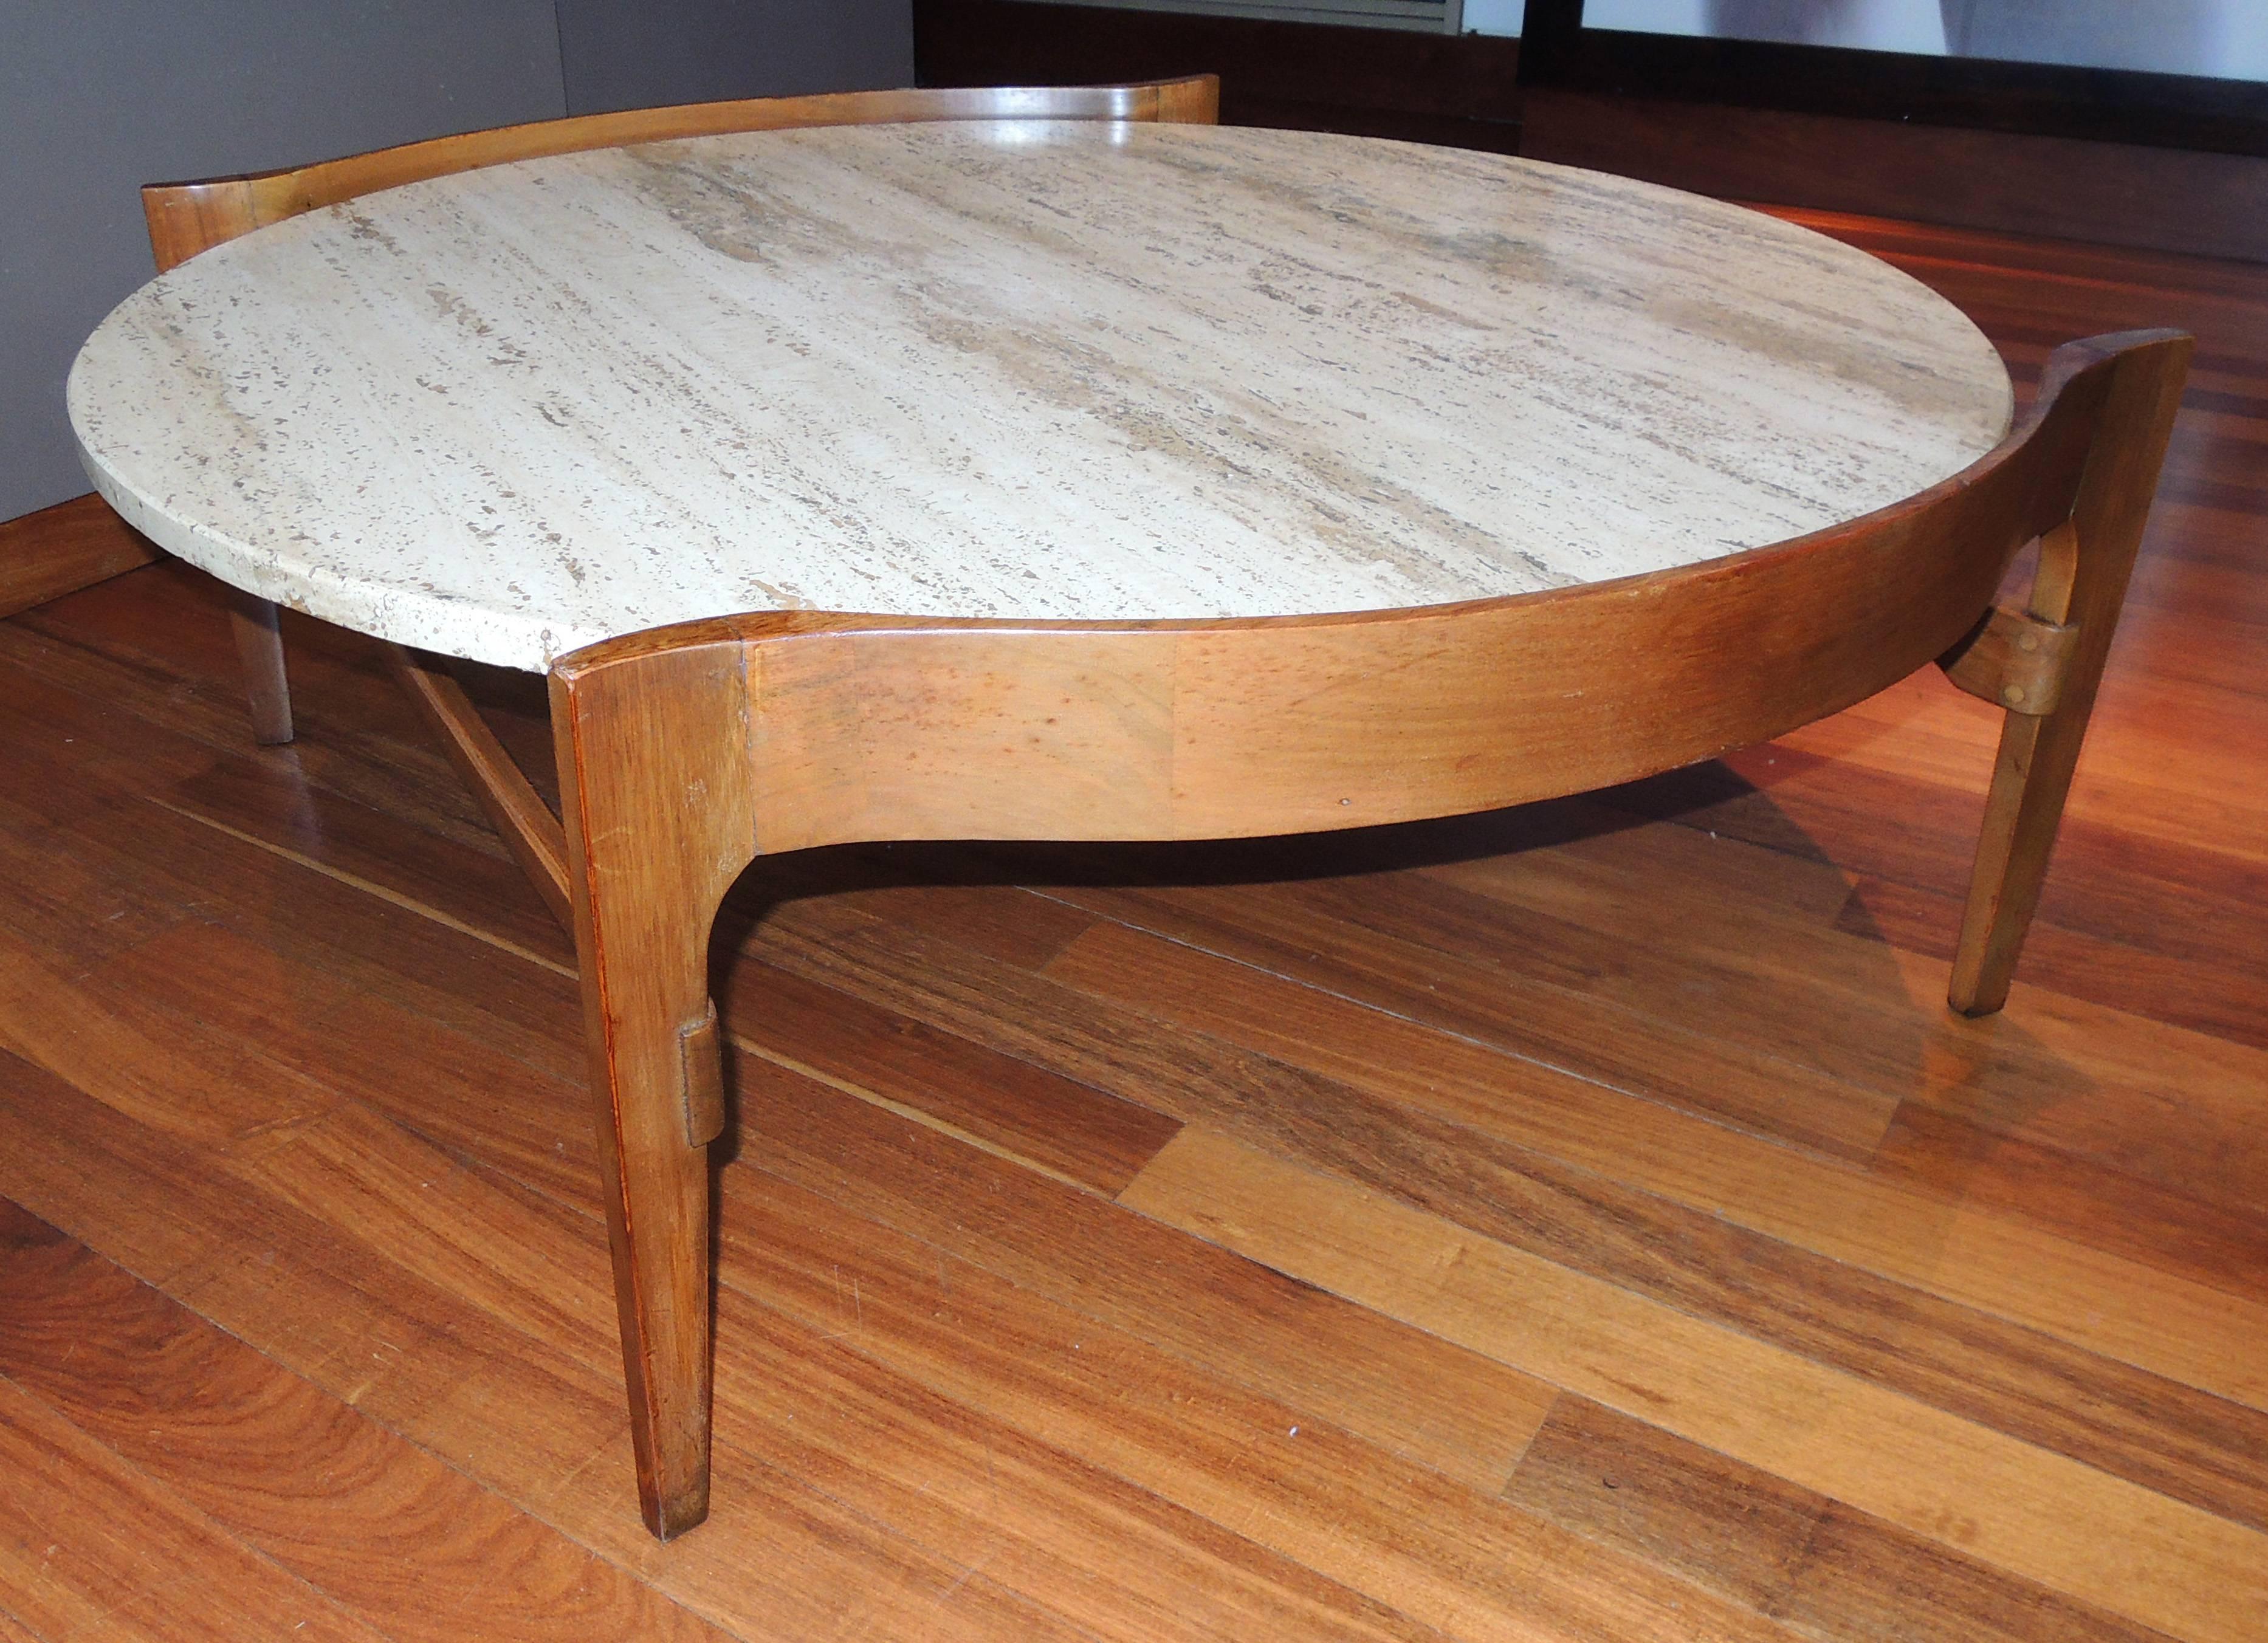 Bertha Schaefer coffee table of Italian travertine and sculptural walnut base.
Mid-Century Classic design for Gordon's Fine Furniture of Johnson City, TN.